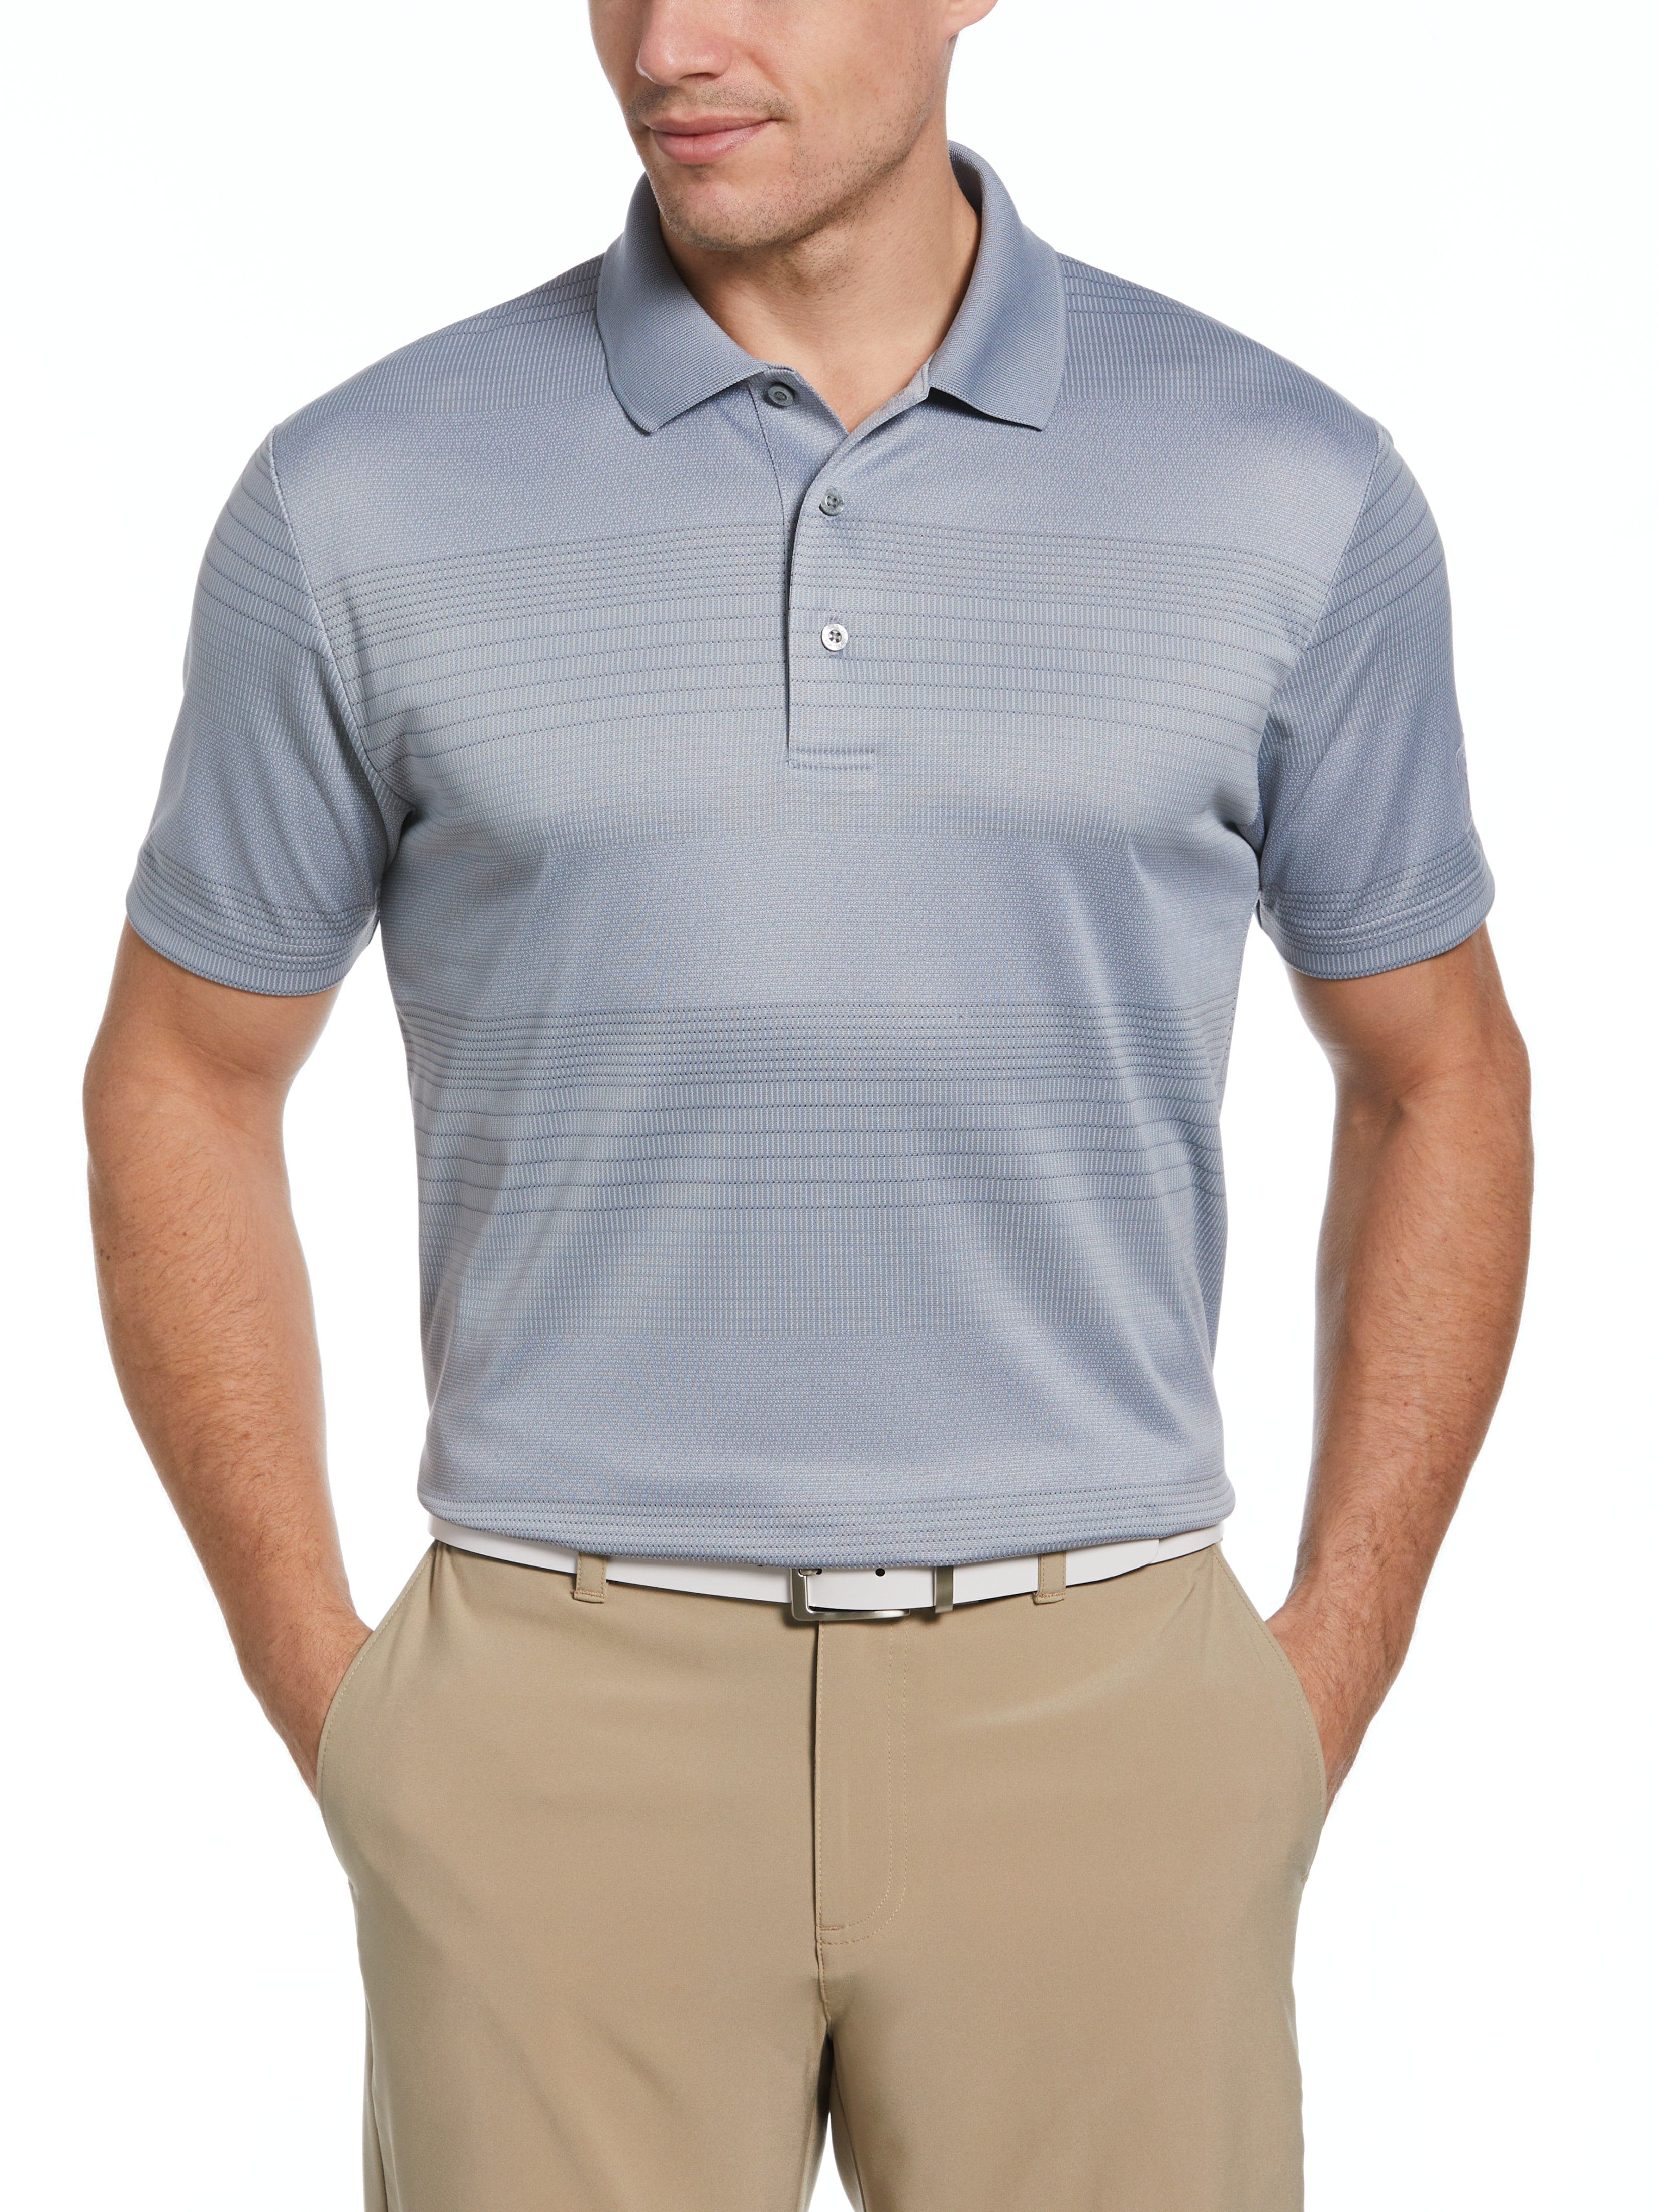 PGA TOUR Apparel Mens Large Scale Birdseye Stripe Jacquard Golf Polo Shirt, Size Medium, Tradewinds Gray, 100% Polyester | Golf Apparel Shop